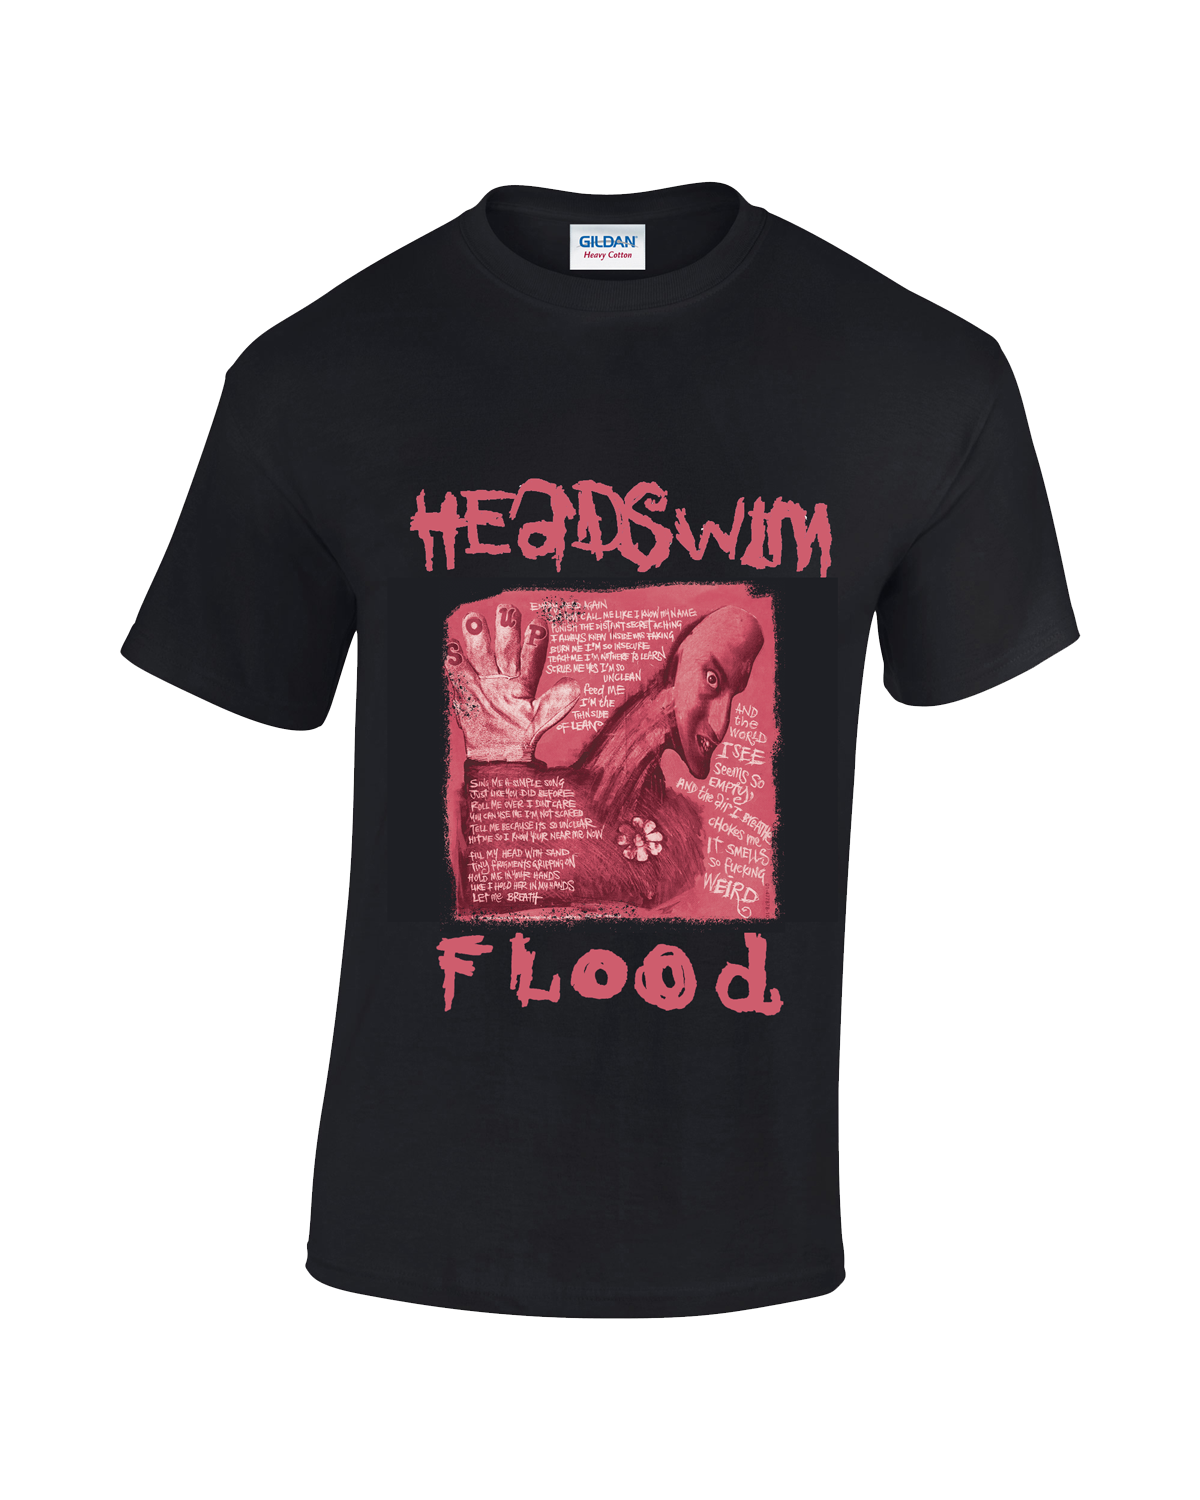 Headswim T's Flood